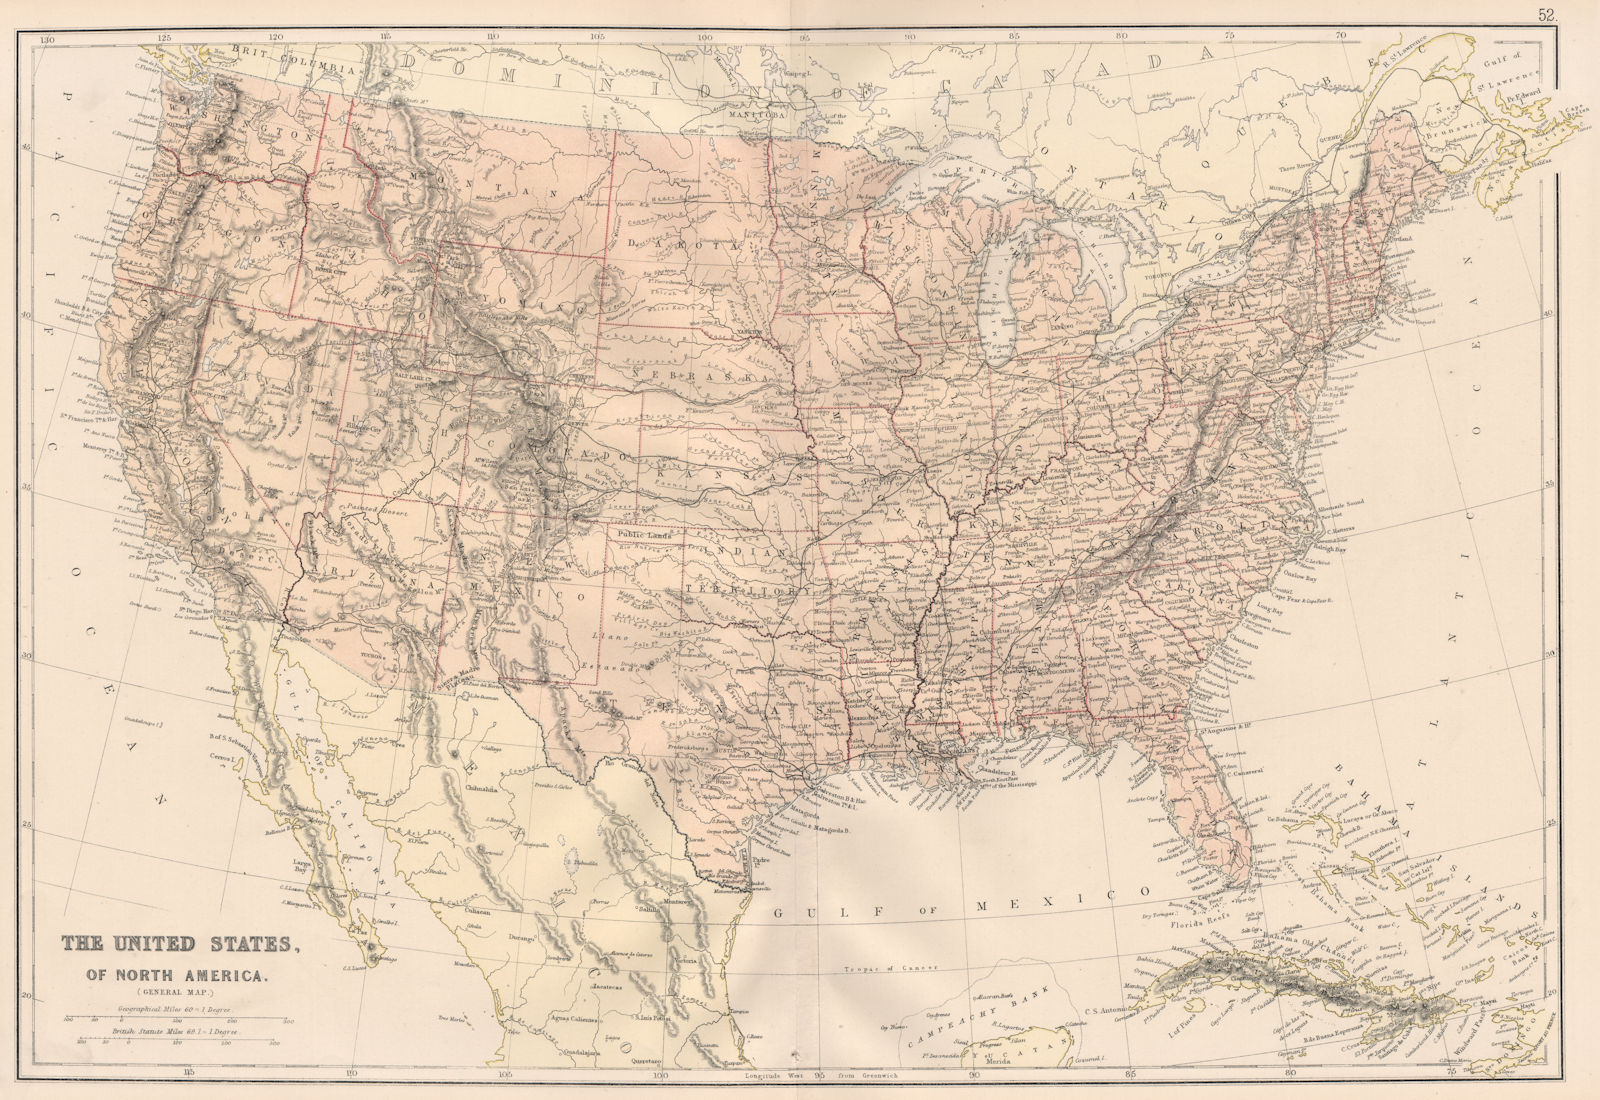 USA. Shows Oklahoma as "Indian Territory". Dakotas as a single state 1882 map